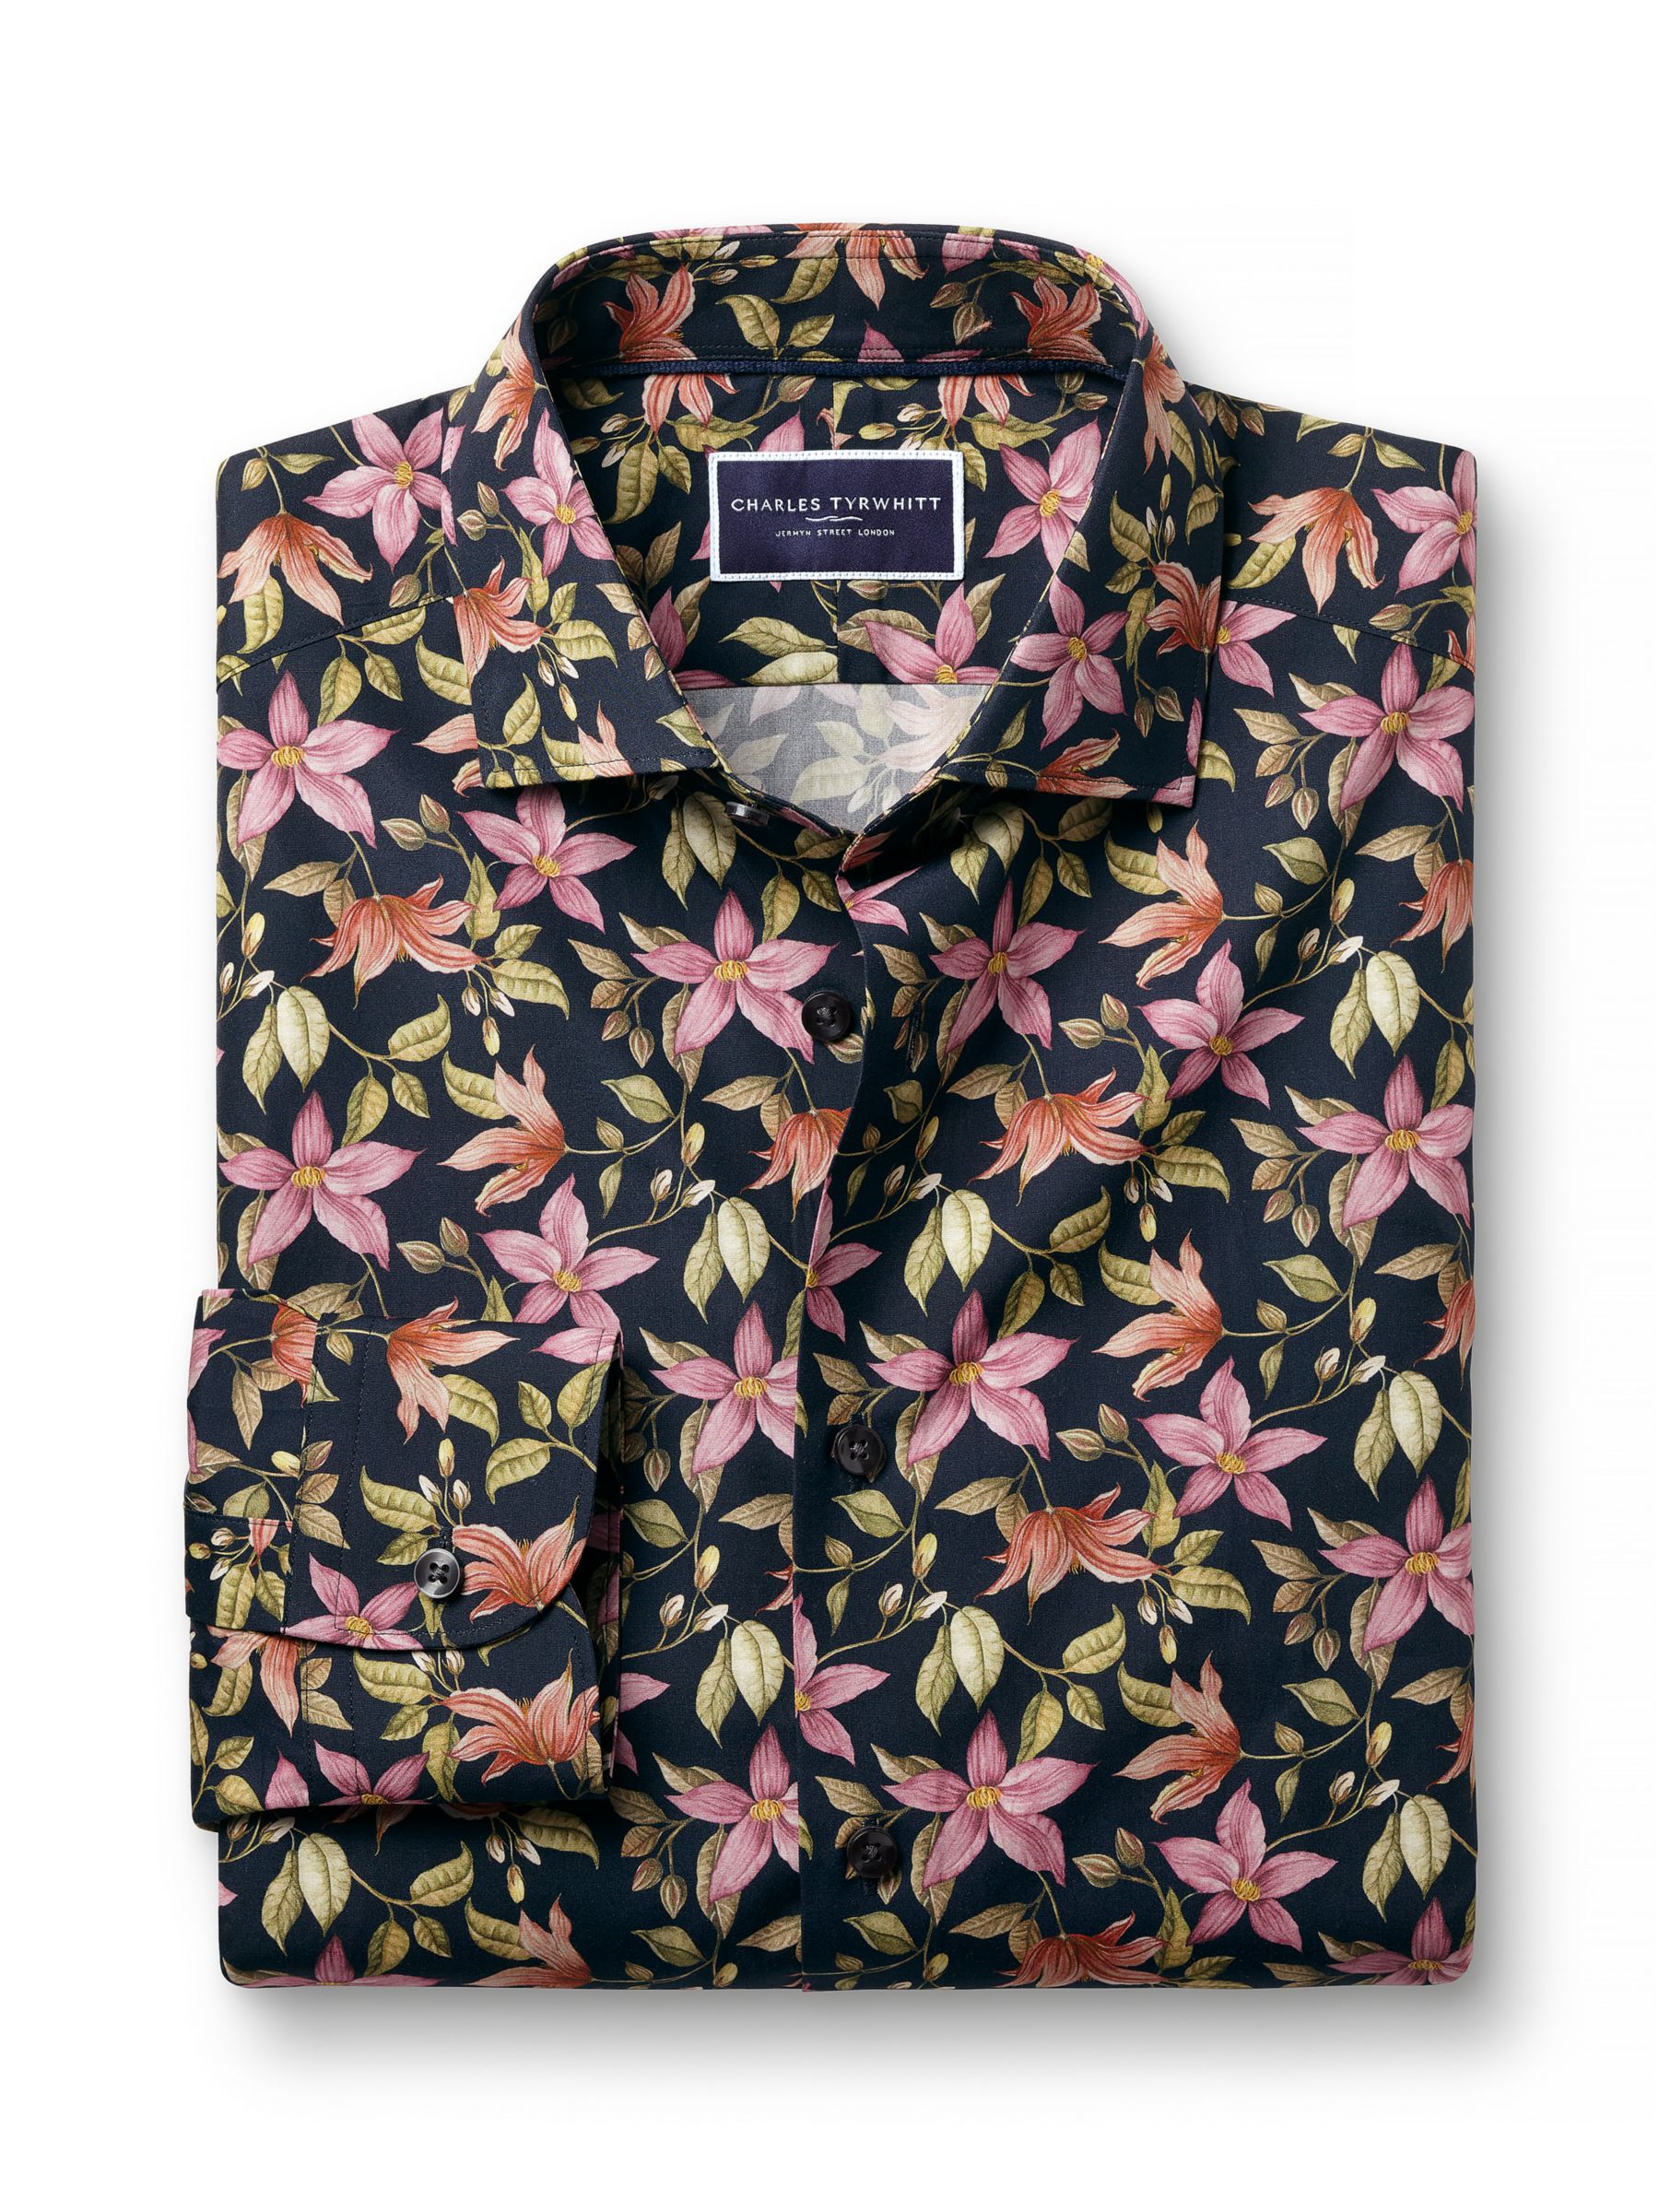 Charles Tyrwhitt Large Floral Liberty Print Slim Fit Shirt, Navy/Multi, S